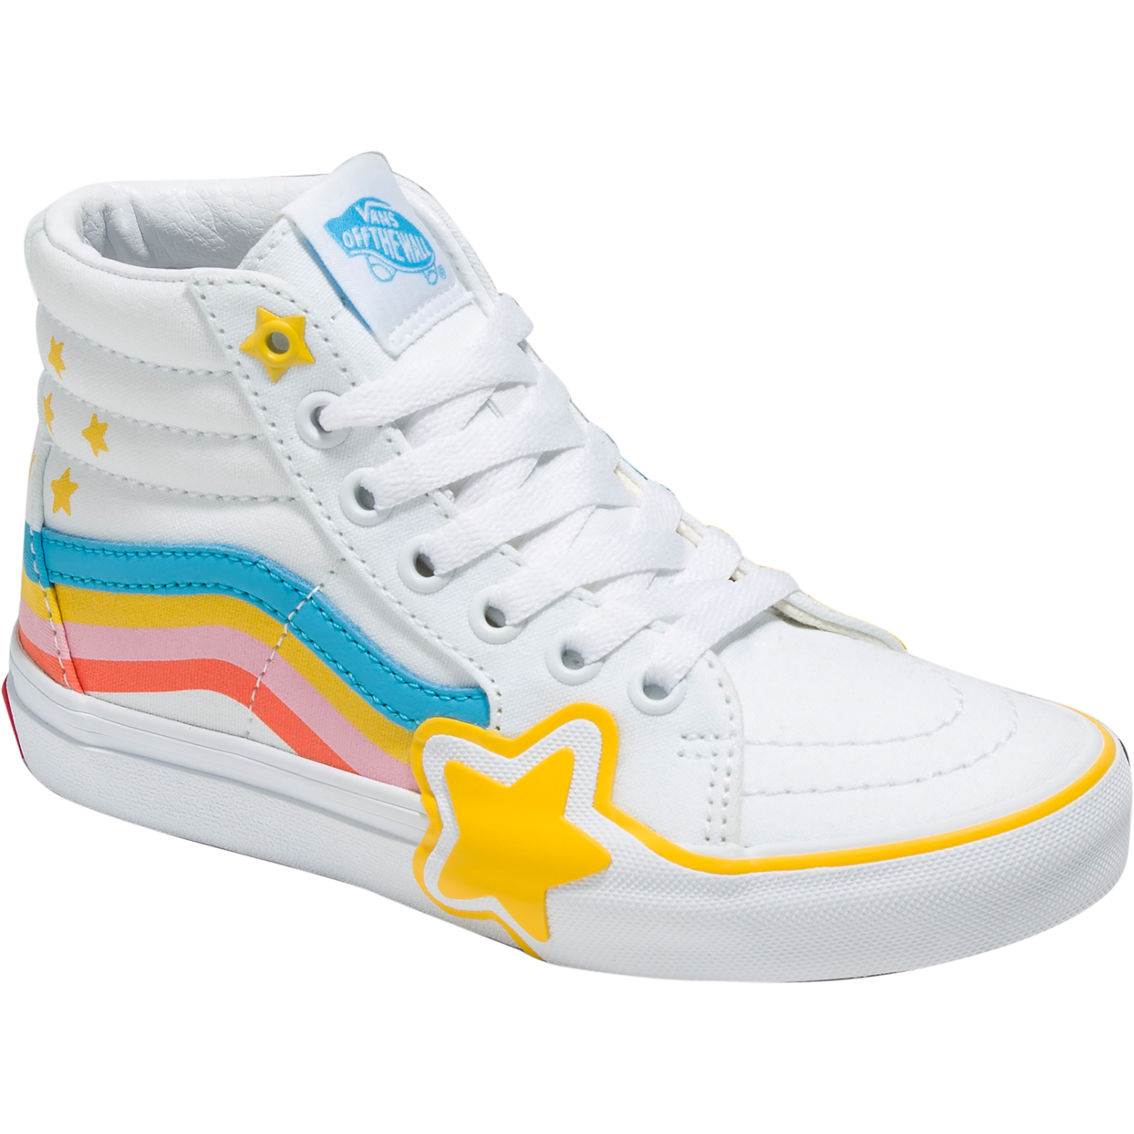 Vans Preschool Girls SK8-Hi Rainbow Star Sneakers